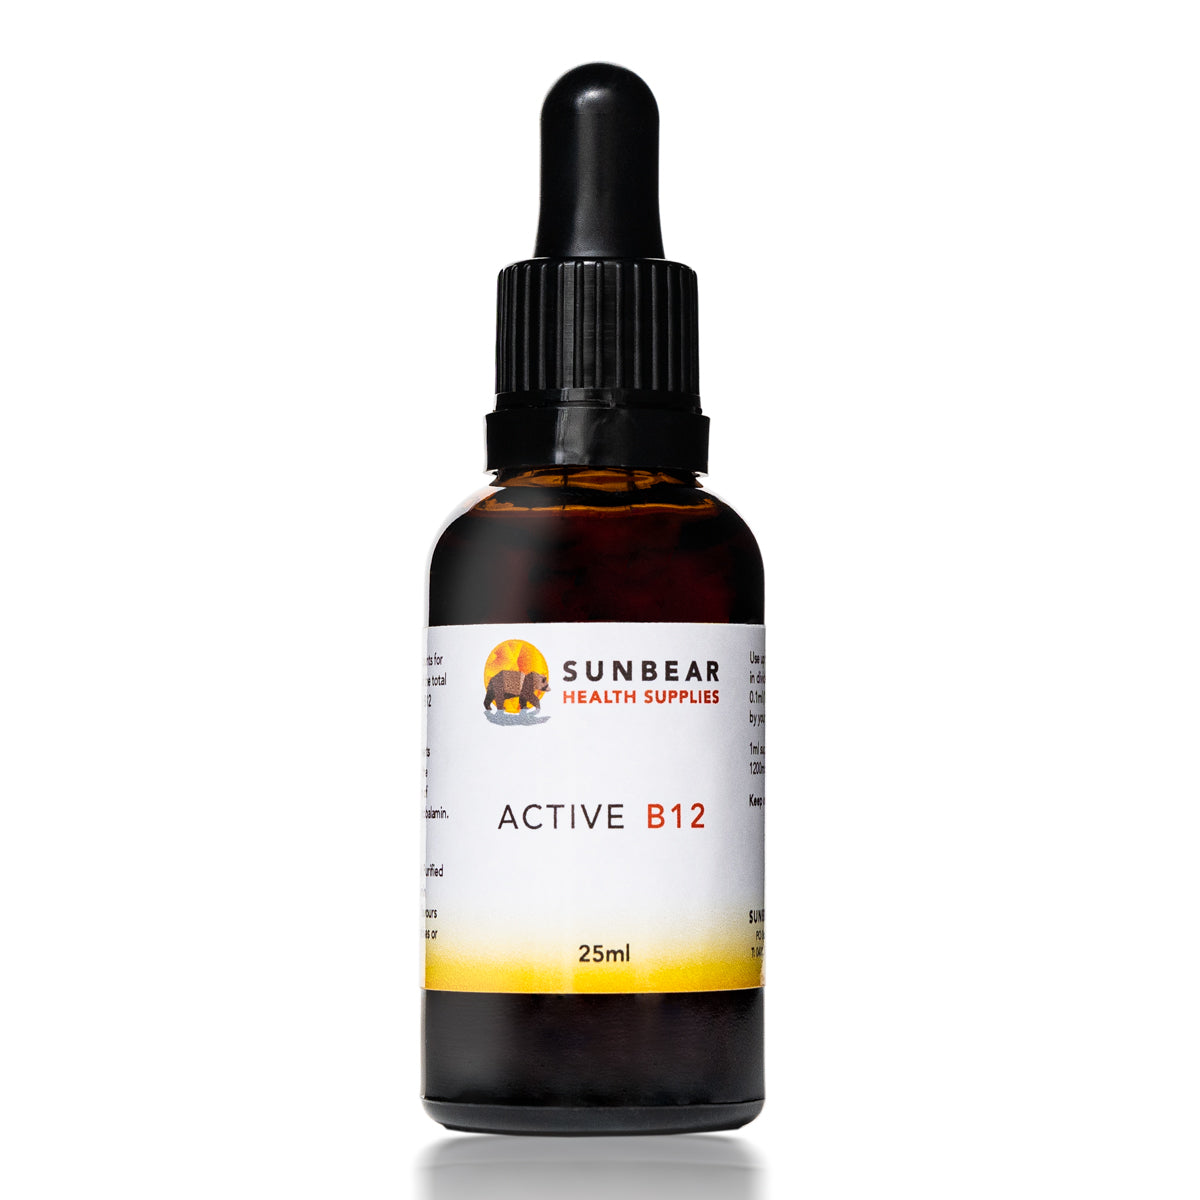 Activated B12 drops - Sunbear Health Supplies –  25ml